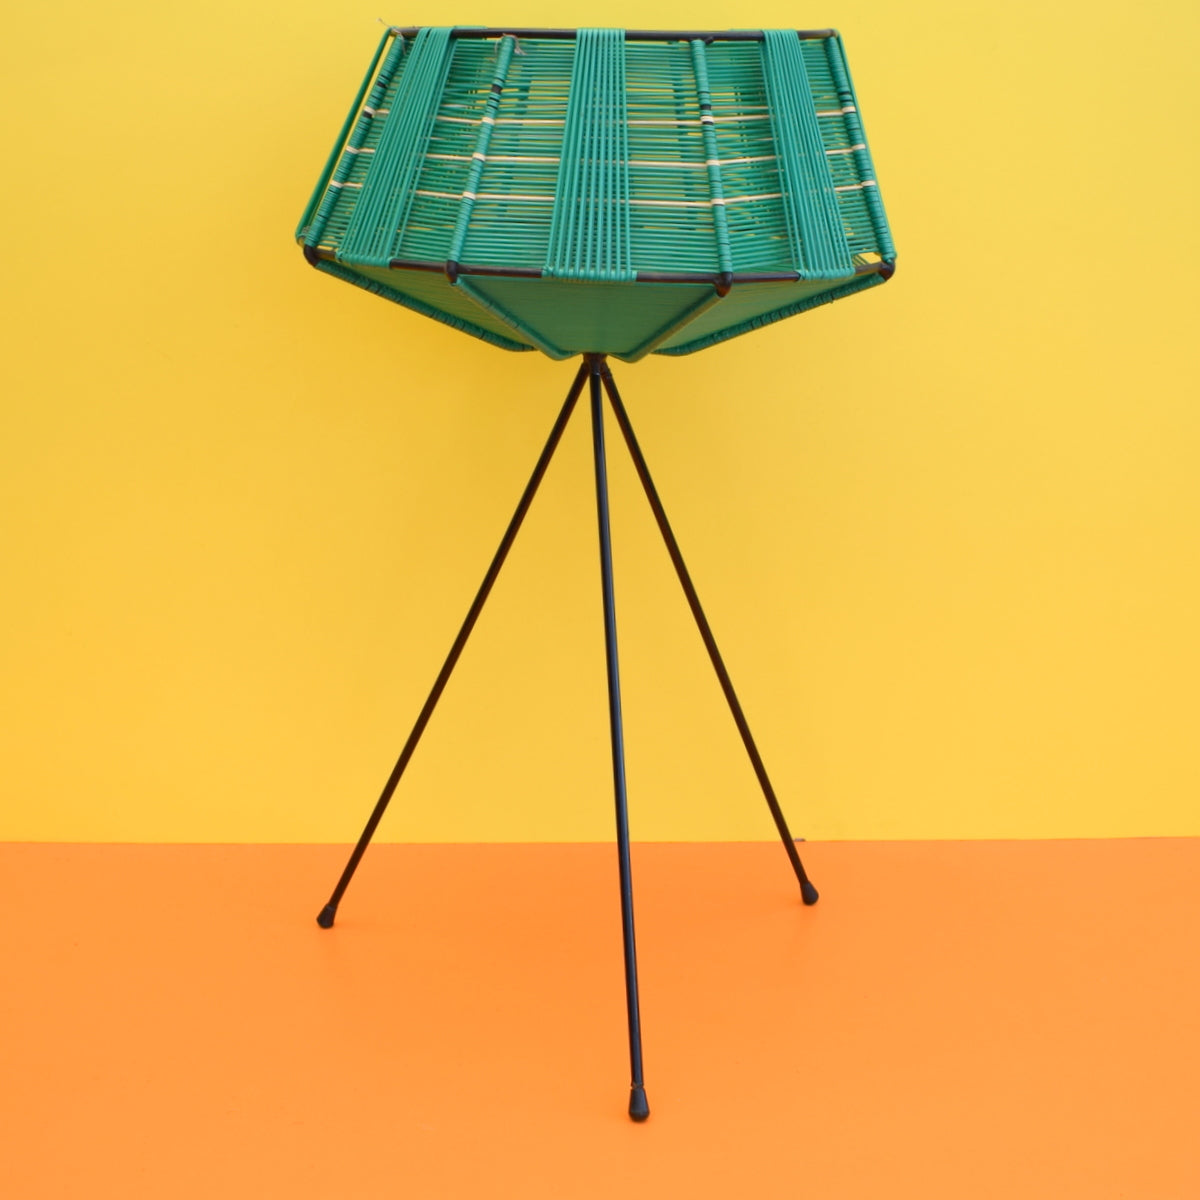 Vintage 1950s Atomic Wool Basket / Plant Stand - Green & Black